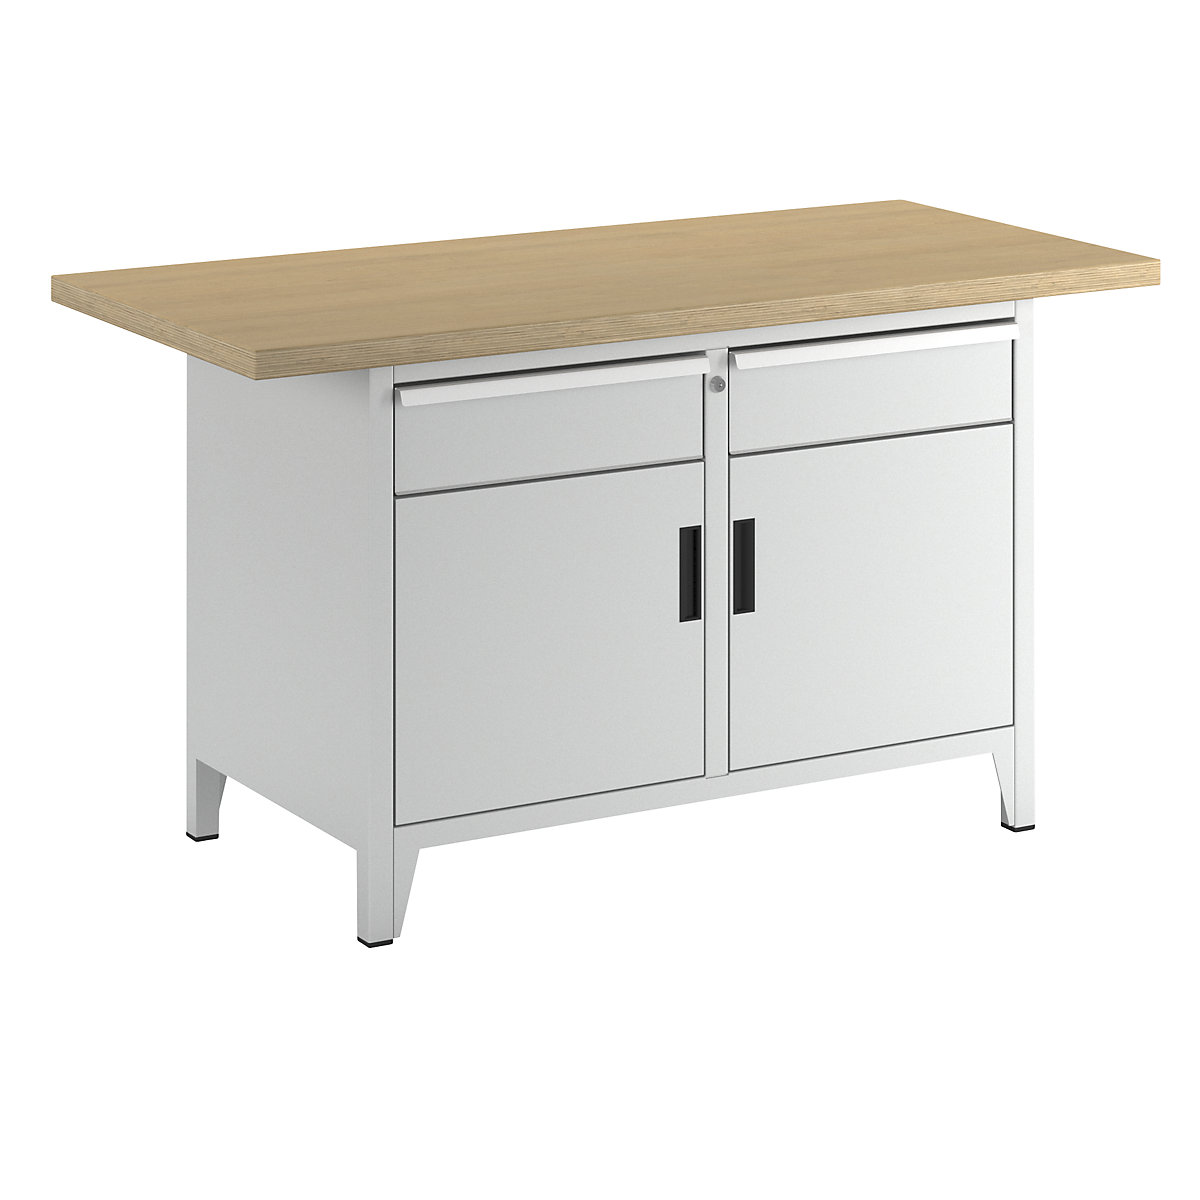 Workbench width 1500 mm, frame construction – LISTA, 2 shelves, 2 drawers, 2 doors, body light grey, front light grey-2